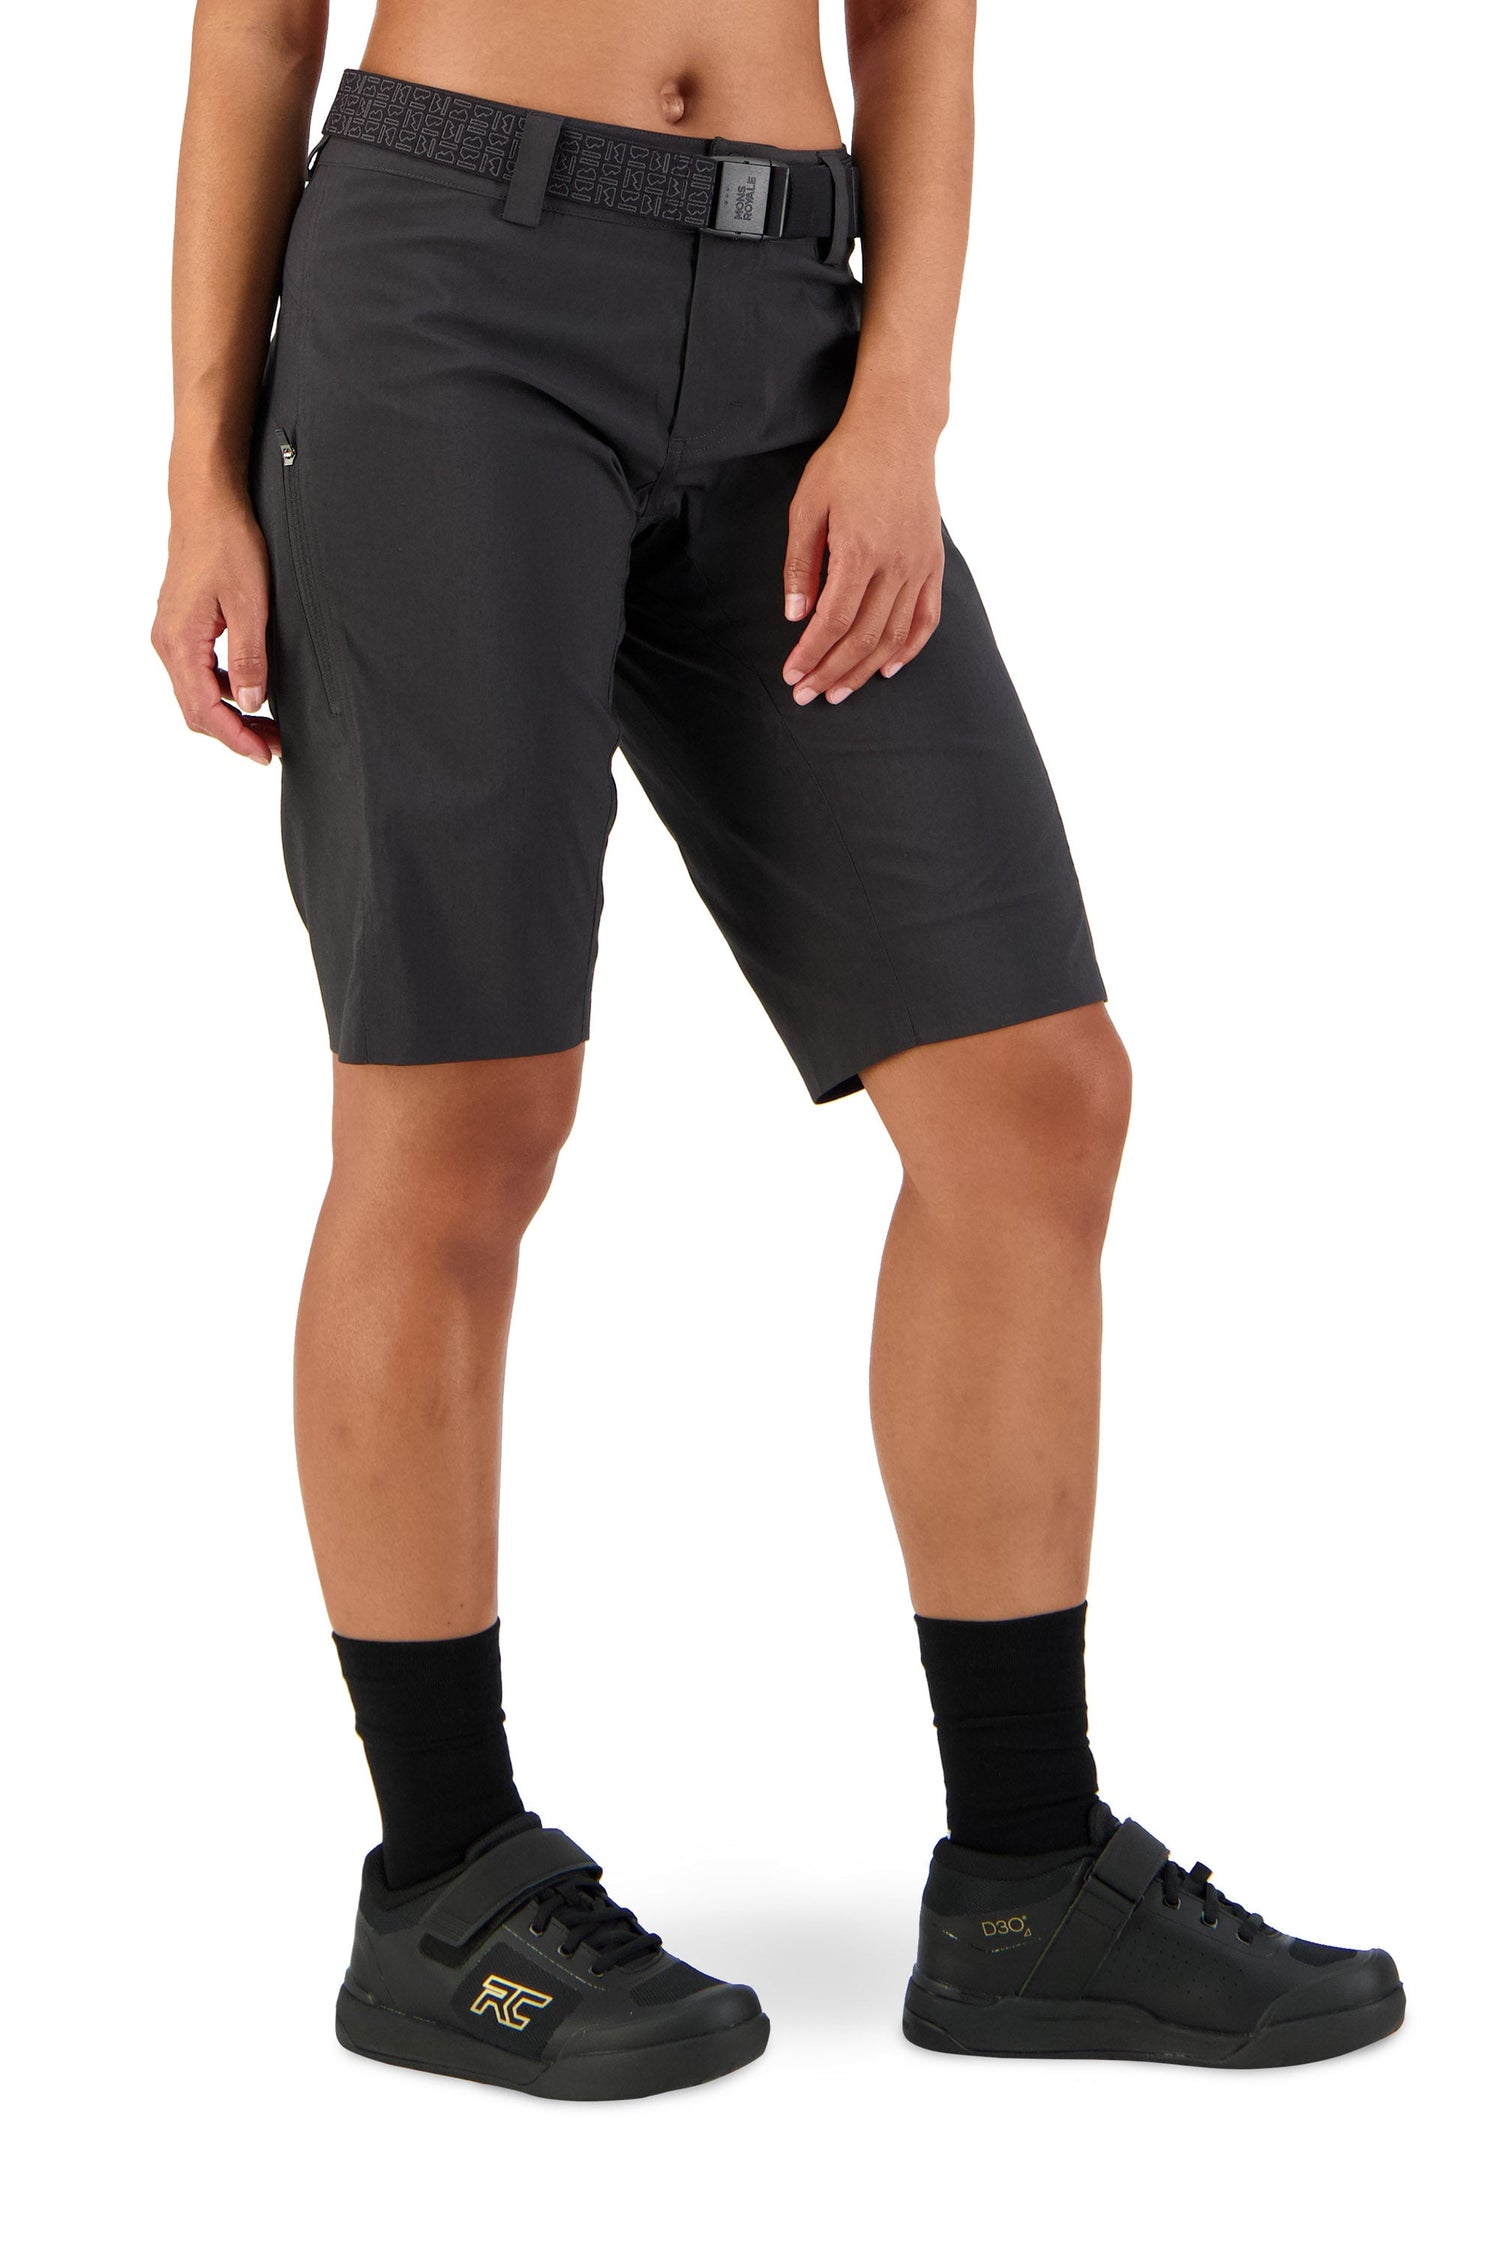 Mons Royale - W's Virage Bike Shorts - Recycled Polyester & Merino - Weekendbee - sustainable sportswear